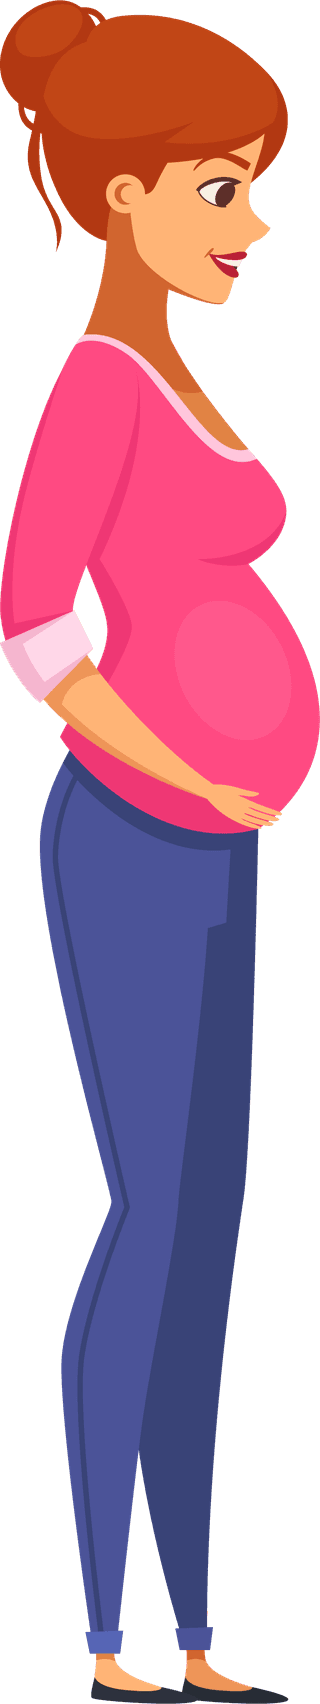 pregnancypregnancy-newborn-cartoon-characters-851824